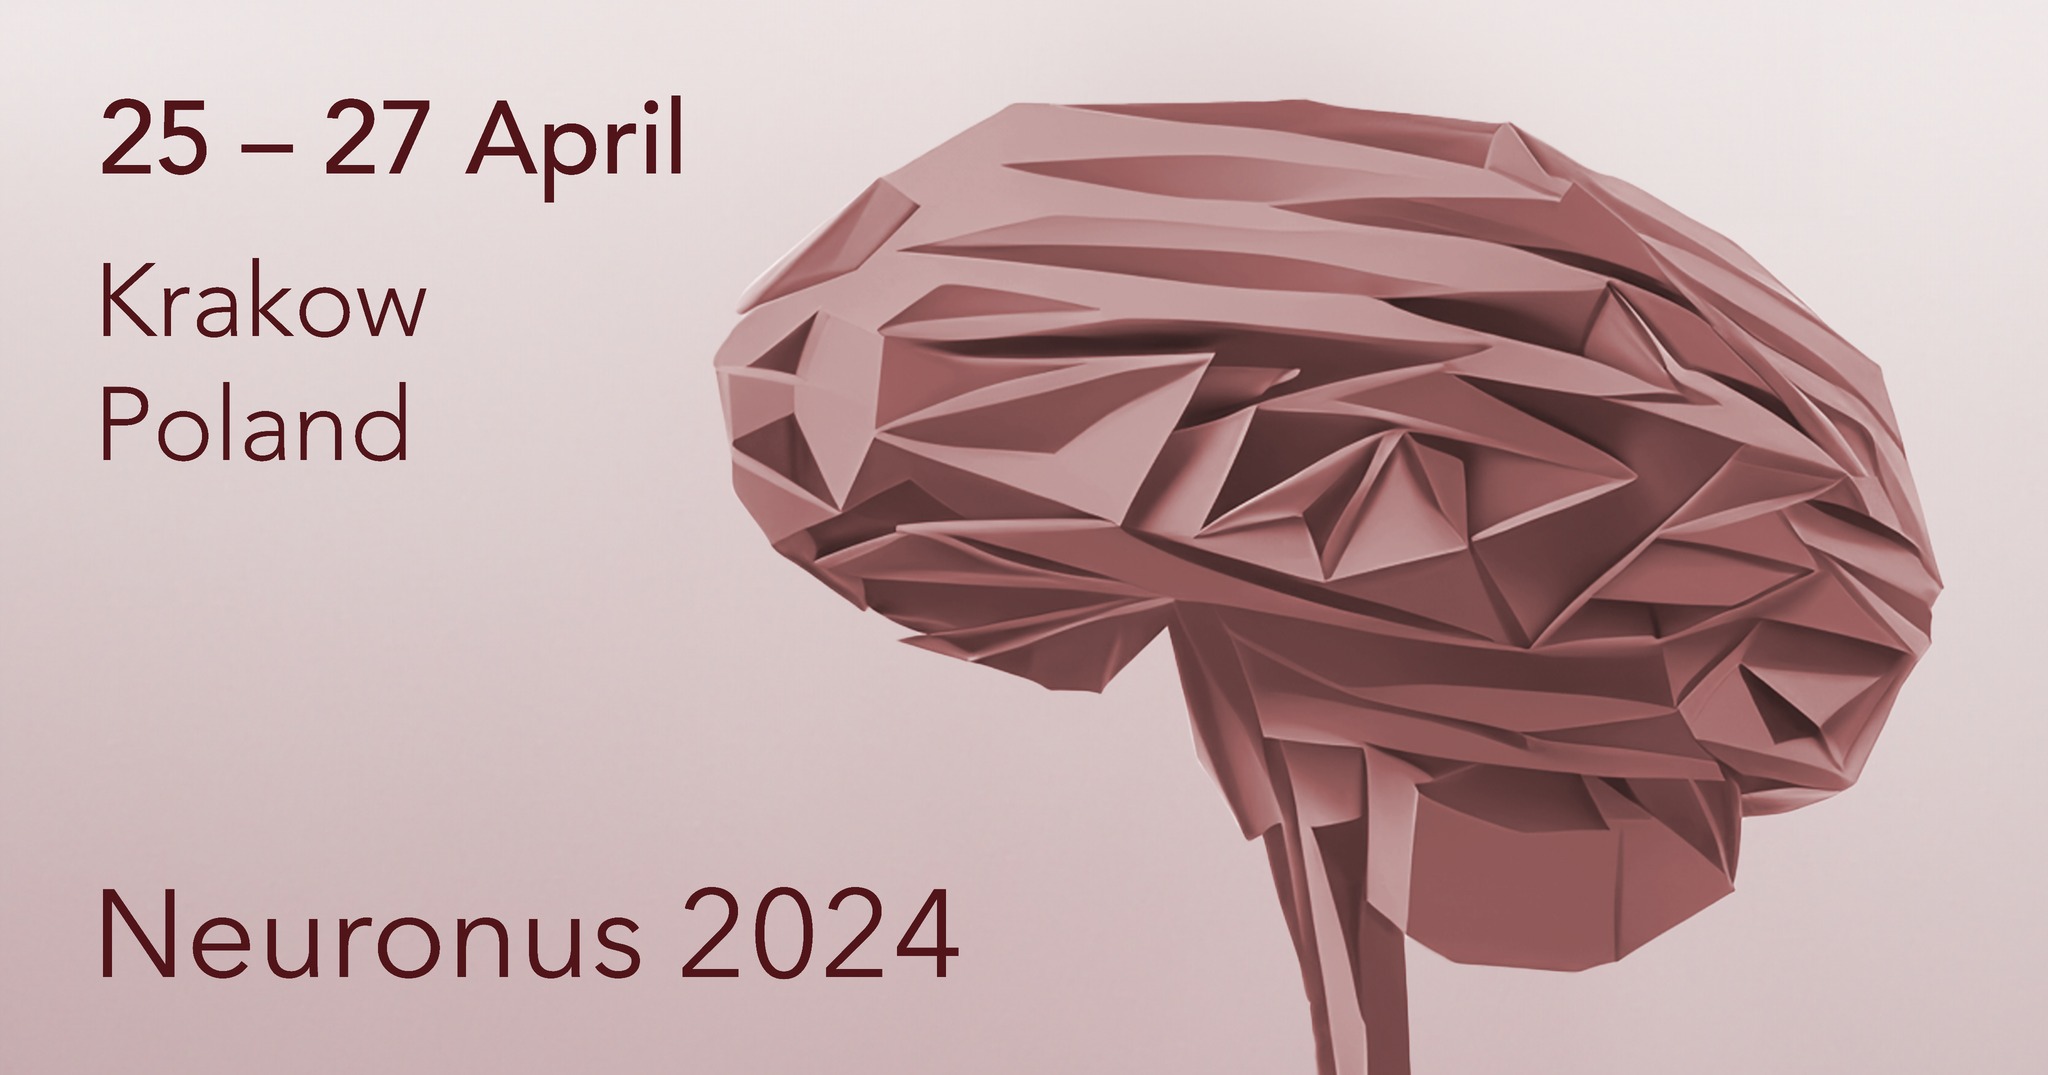 Neuronus 2024